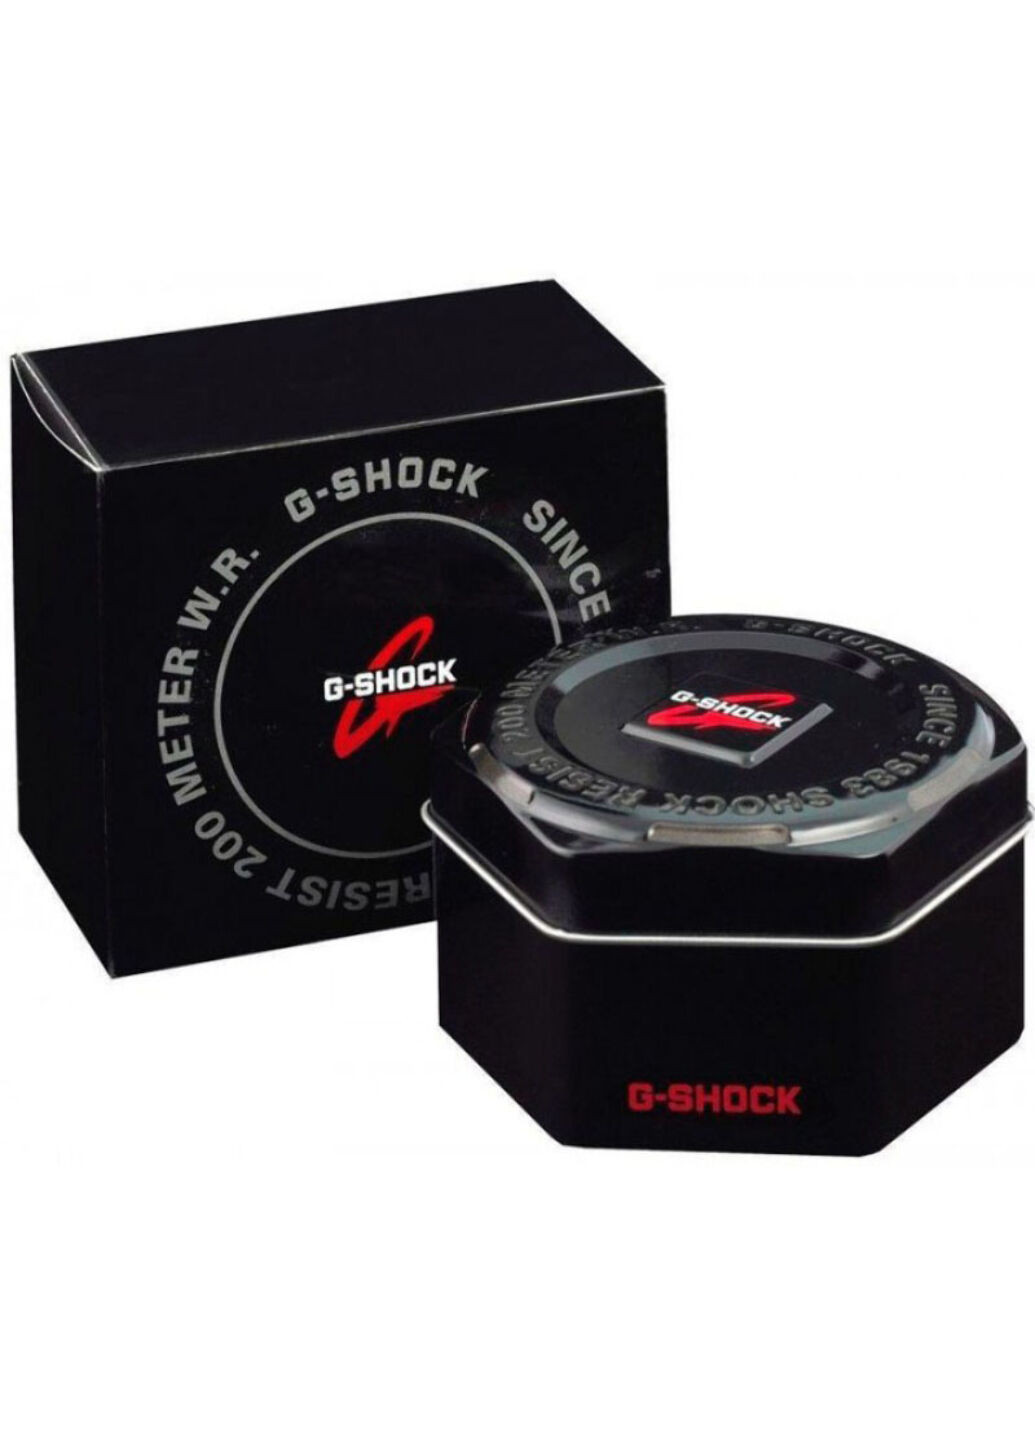 Часы наручные Casio glx-s5600-3er (272126616)